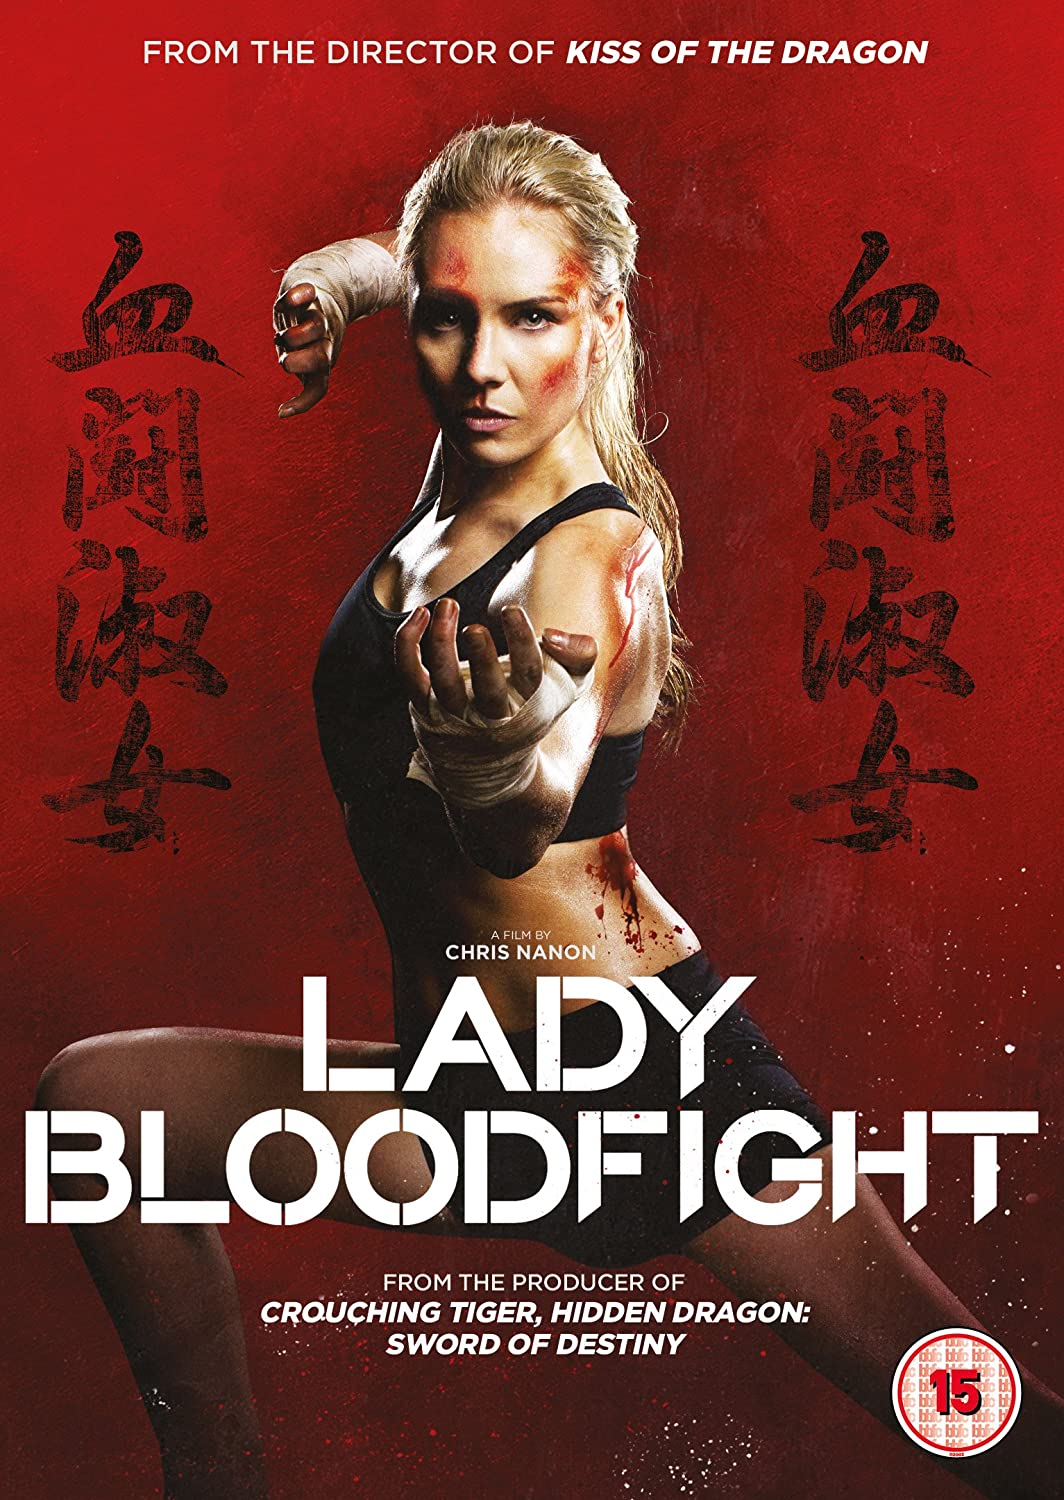 Lady Bloodfight – Action/Drama [DVD]